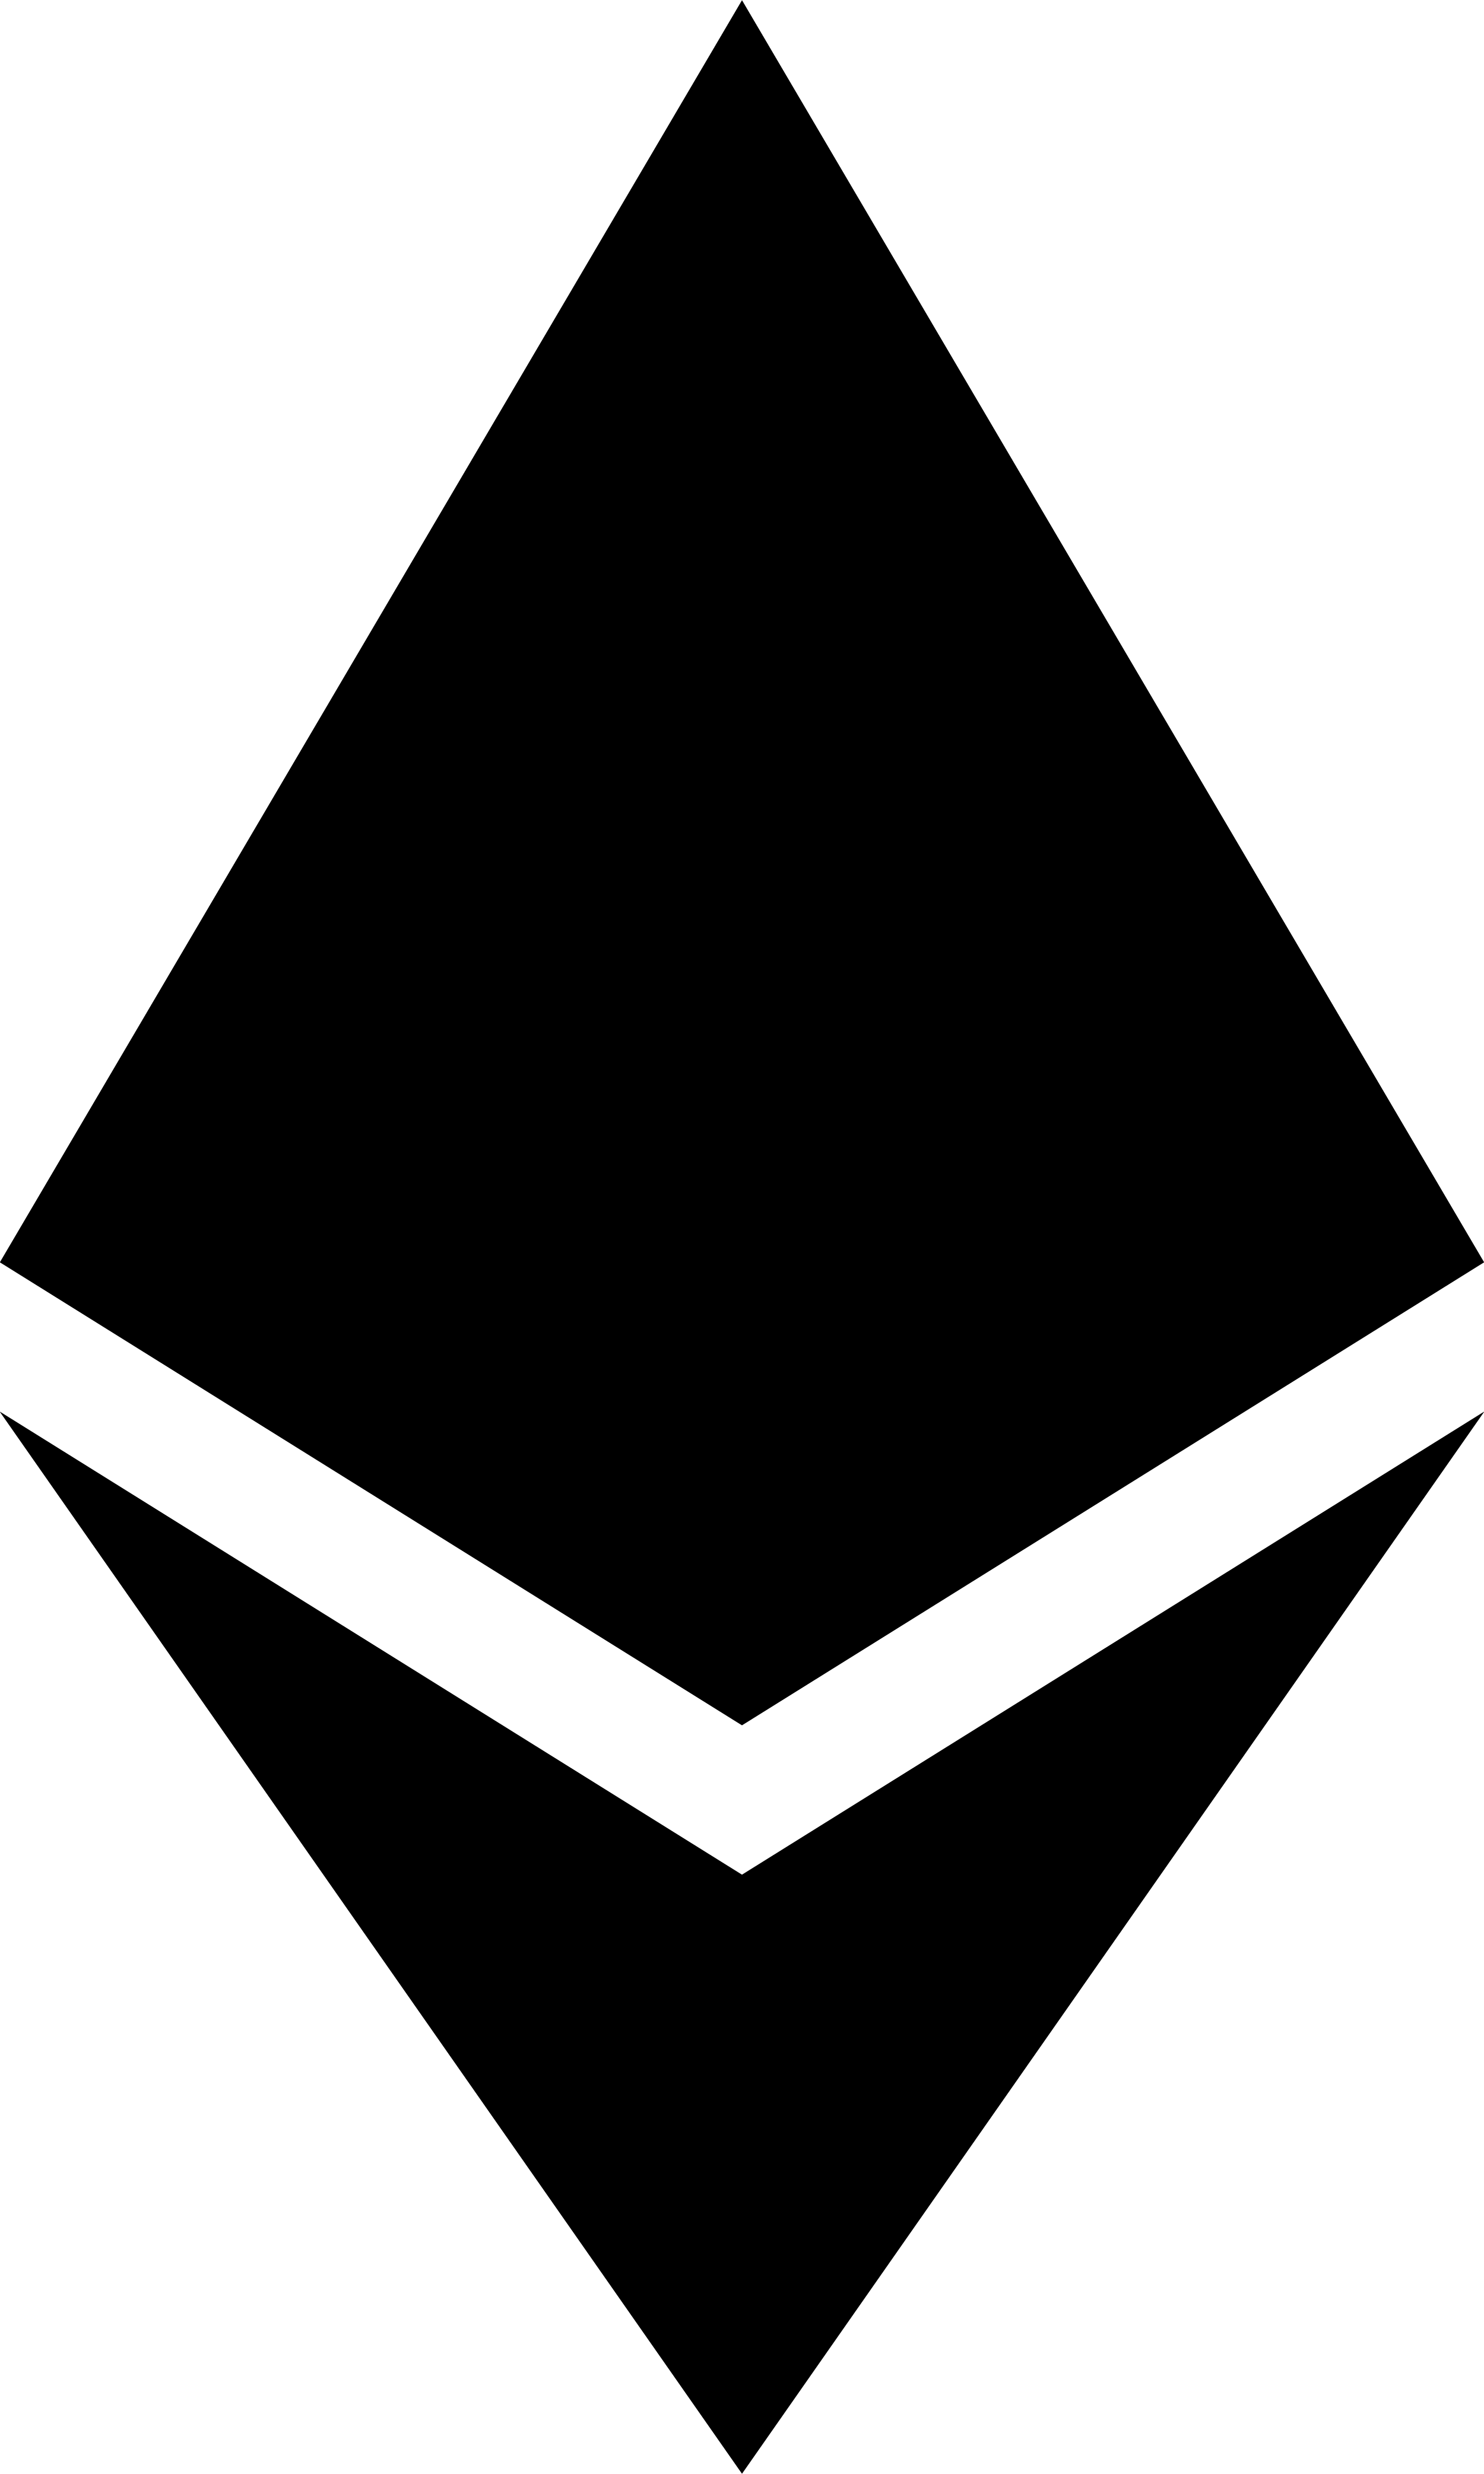 Ethereum Brand Assets | Ethereum.org